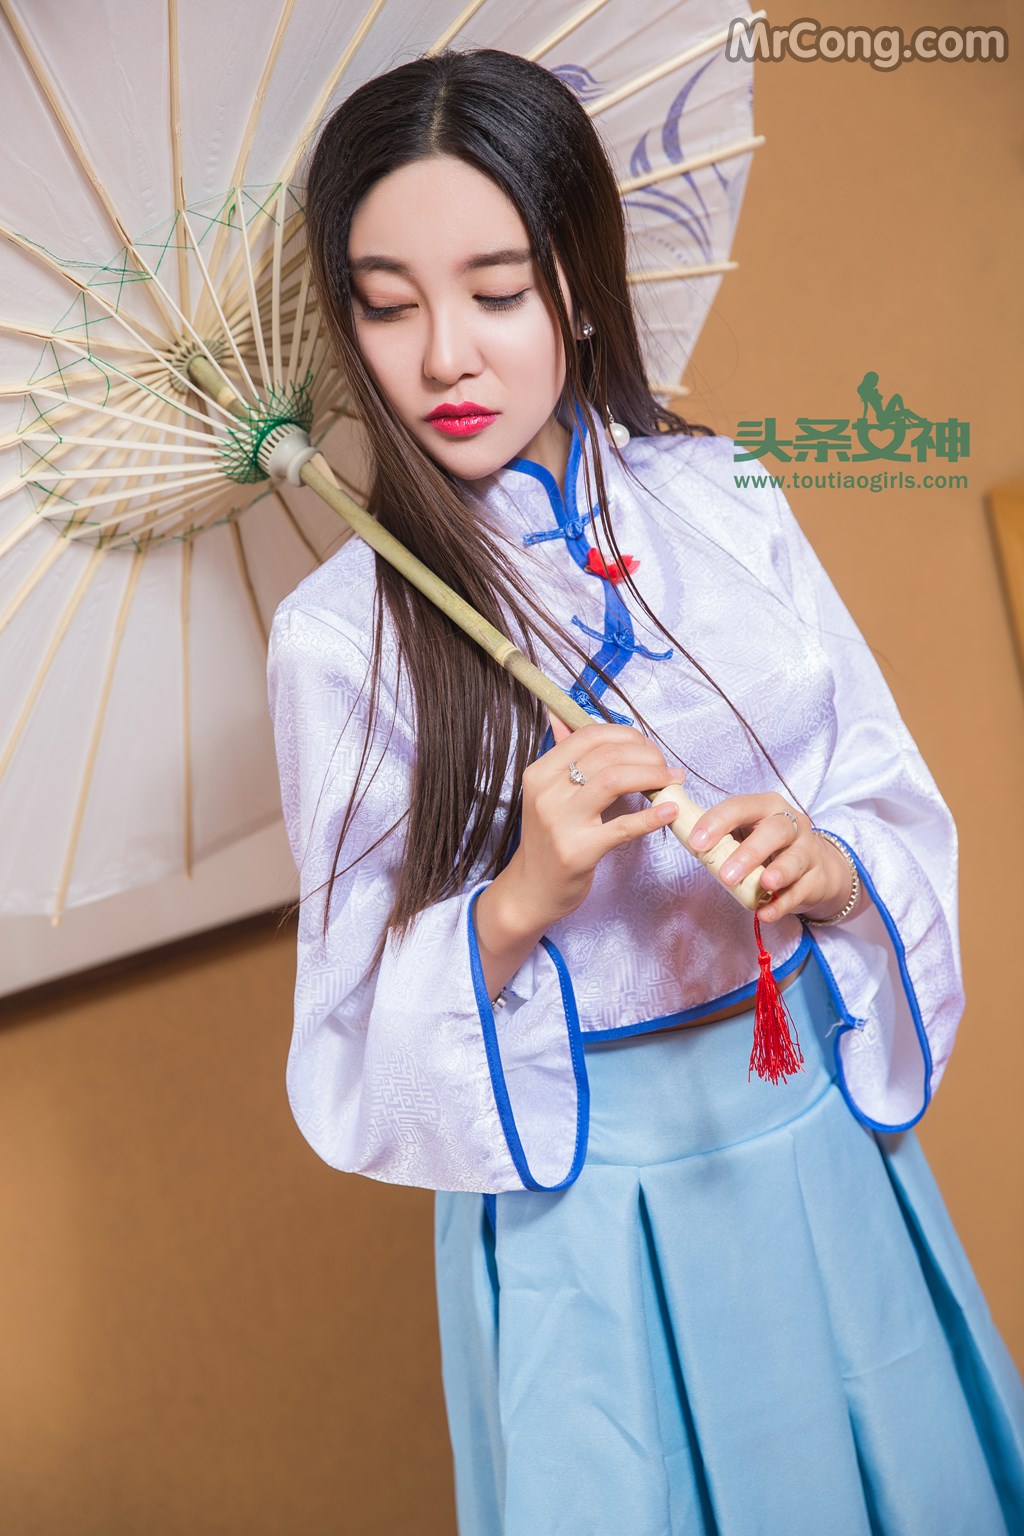 TouTiao 2017-04-01: Model Li Zi Xi (李梓 熙) (36 photos)